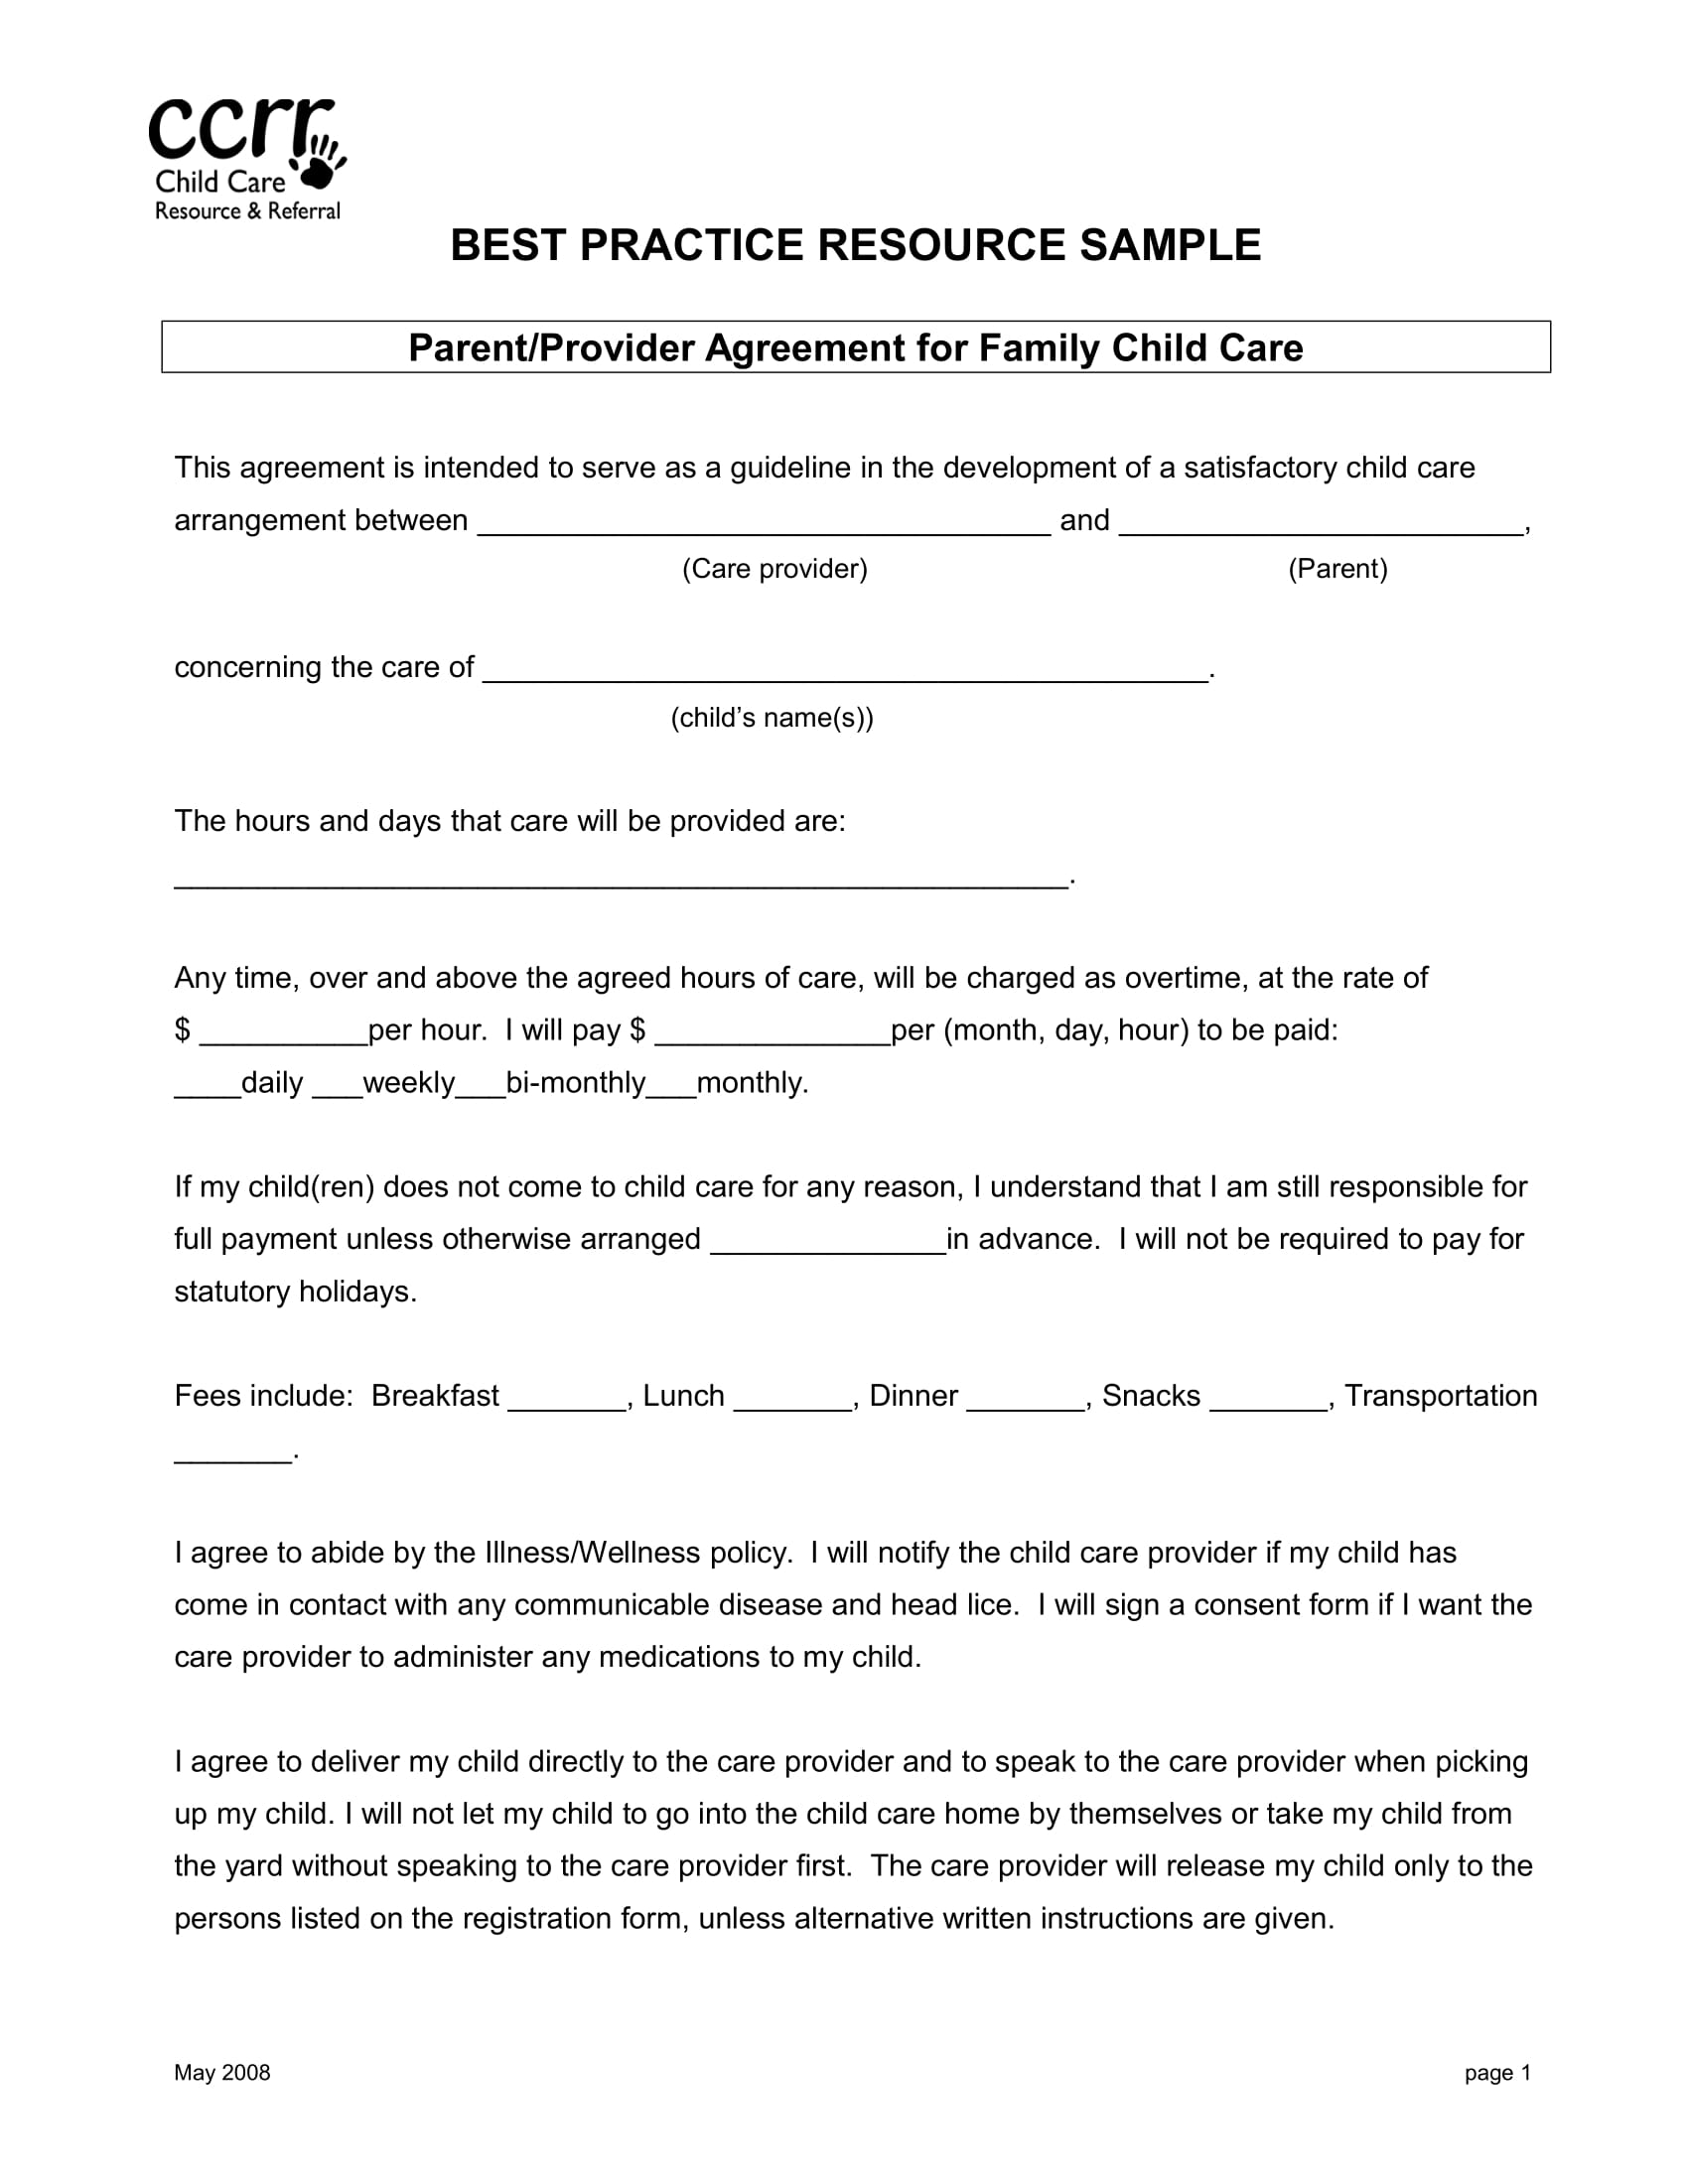 parent provider agreement for family child care